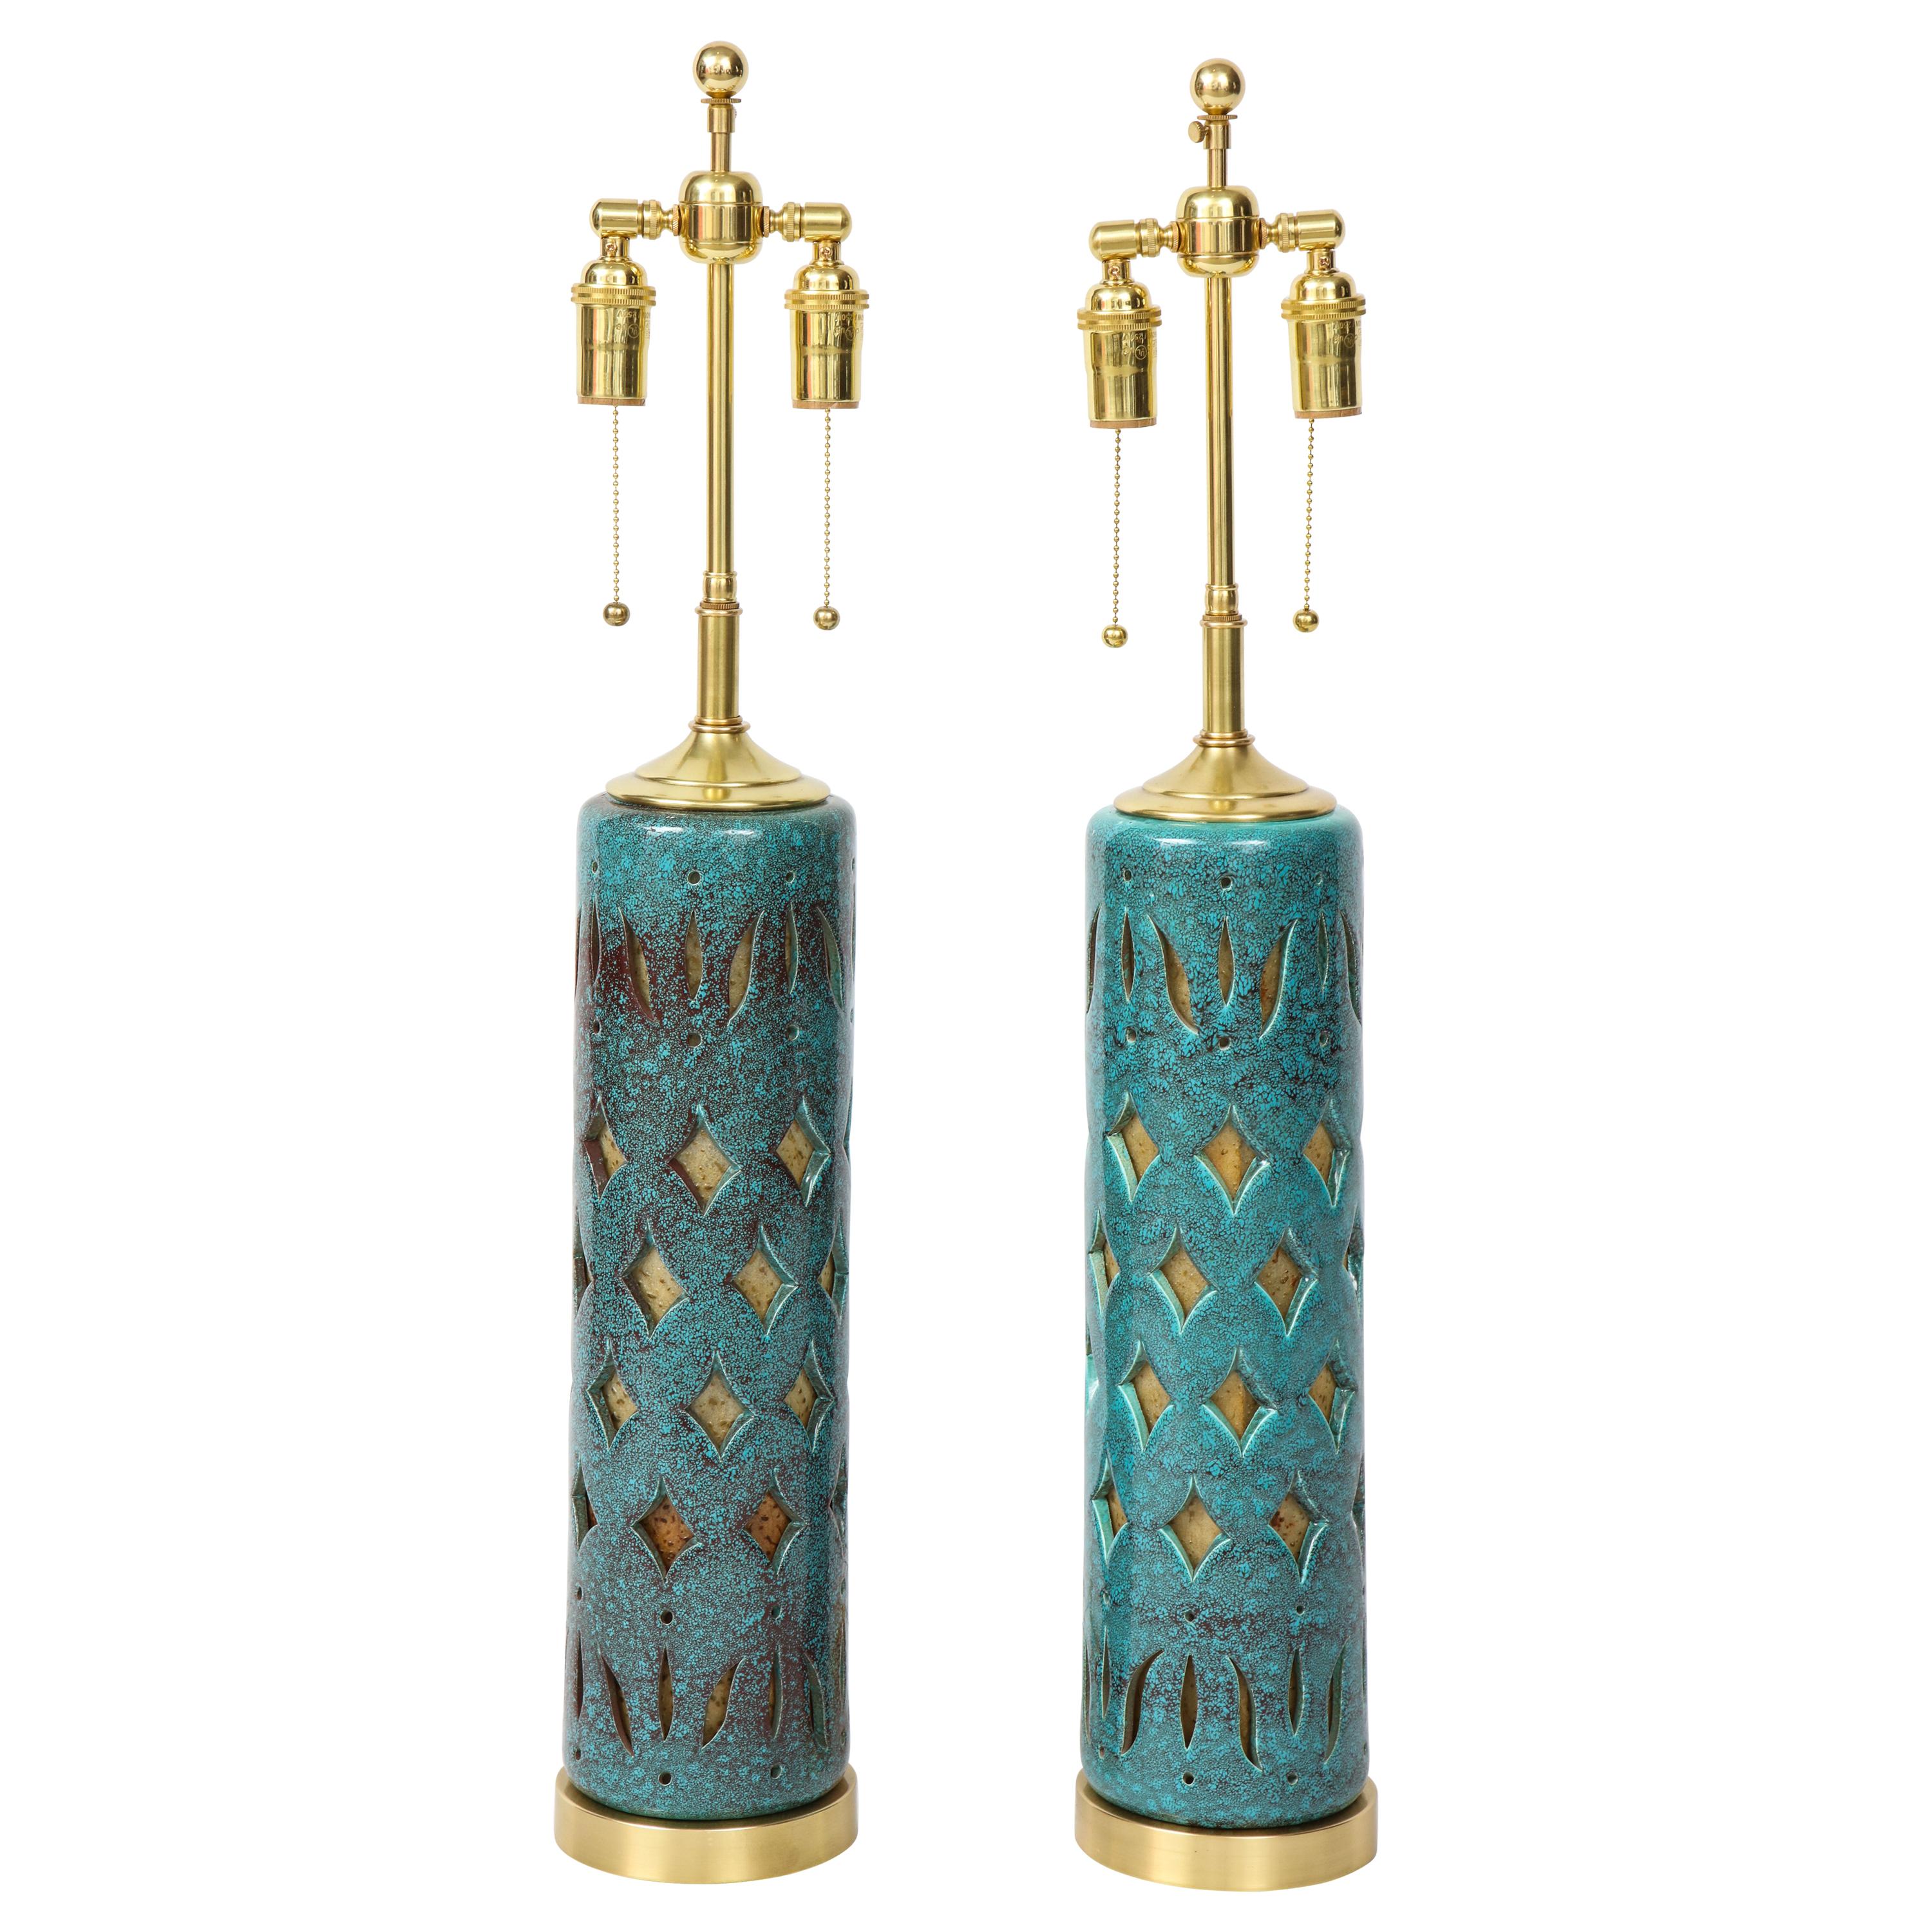 Pair of Teal Glazed Italian Ceramic Lamps